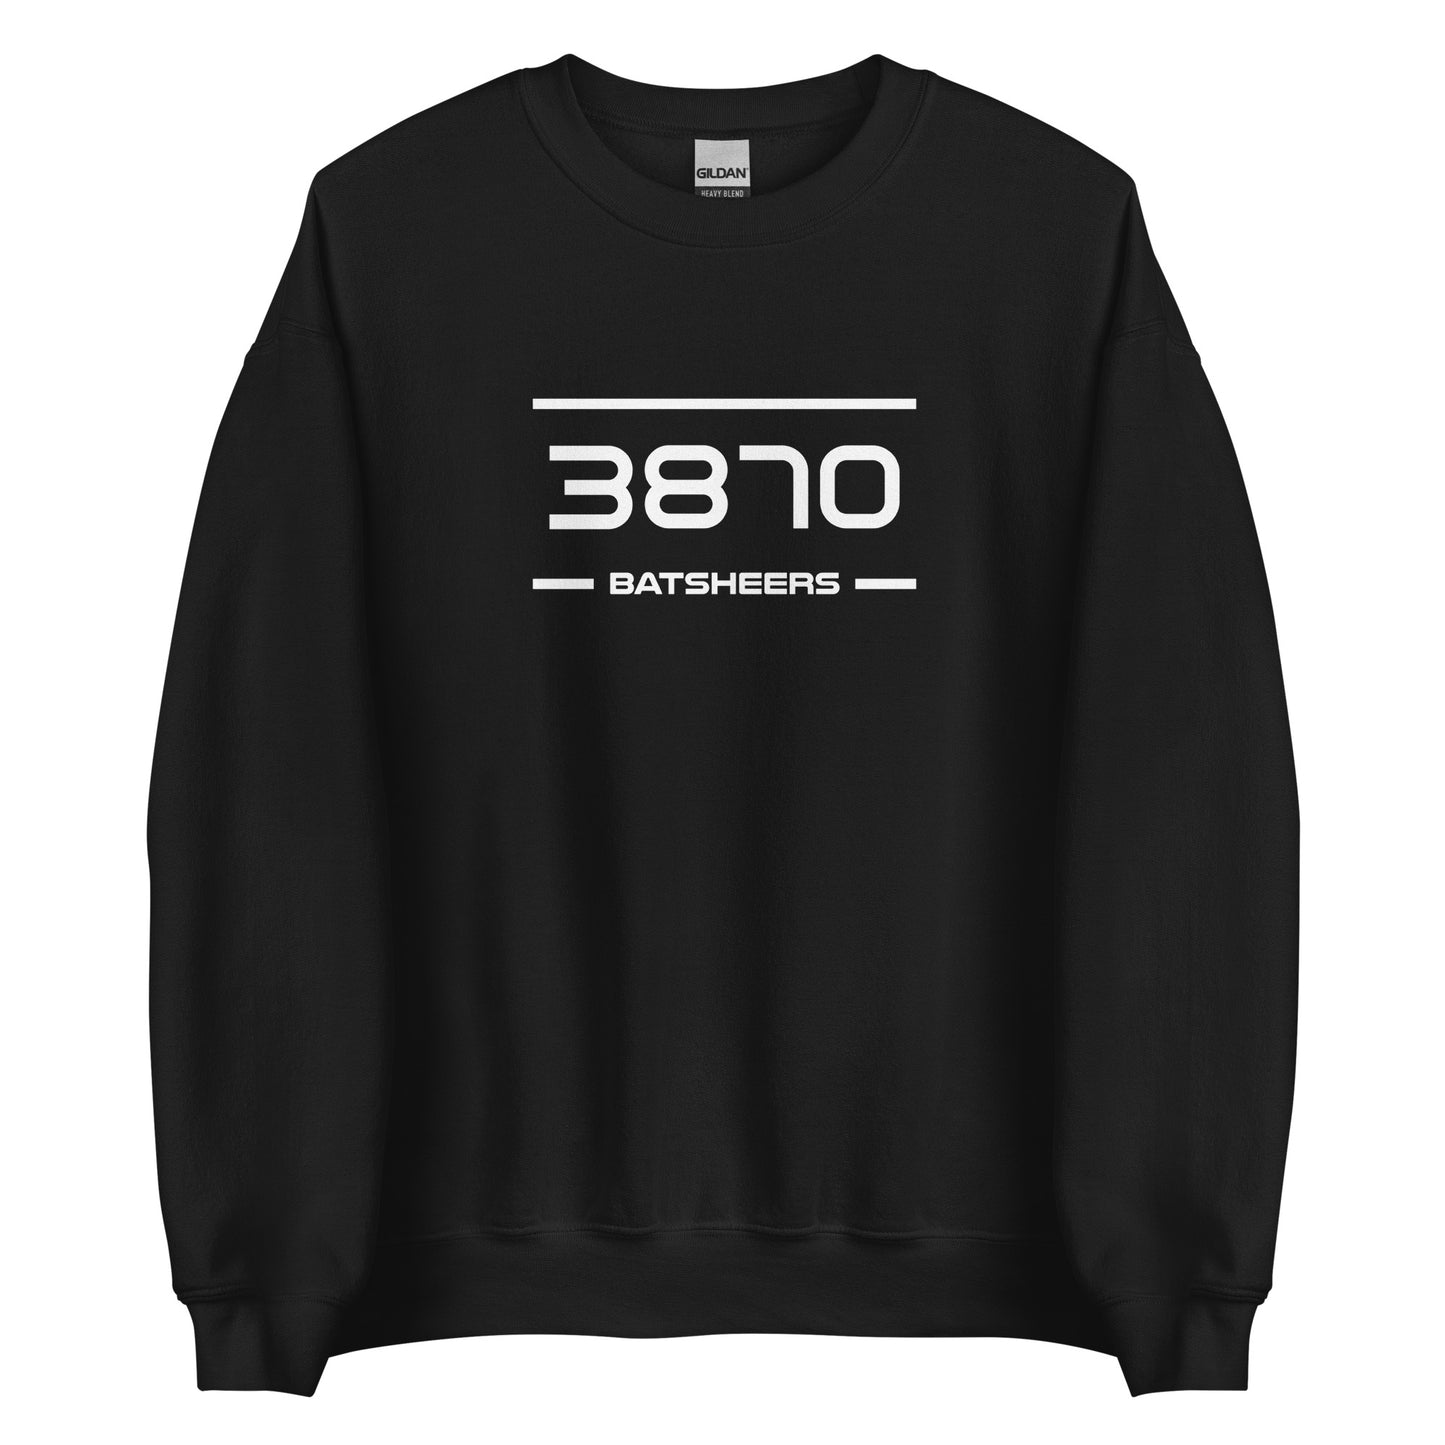 Sweater - 3870 - Batheers (M/V)